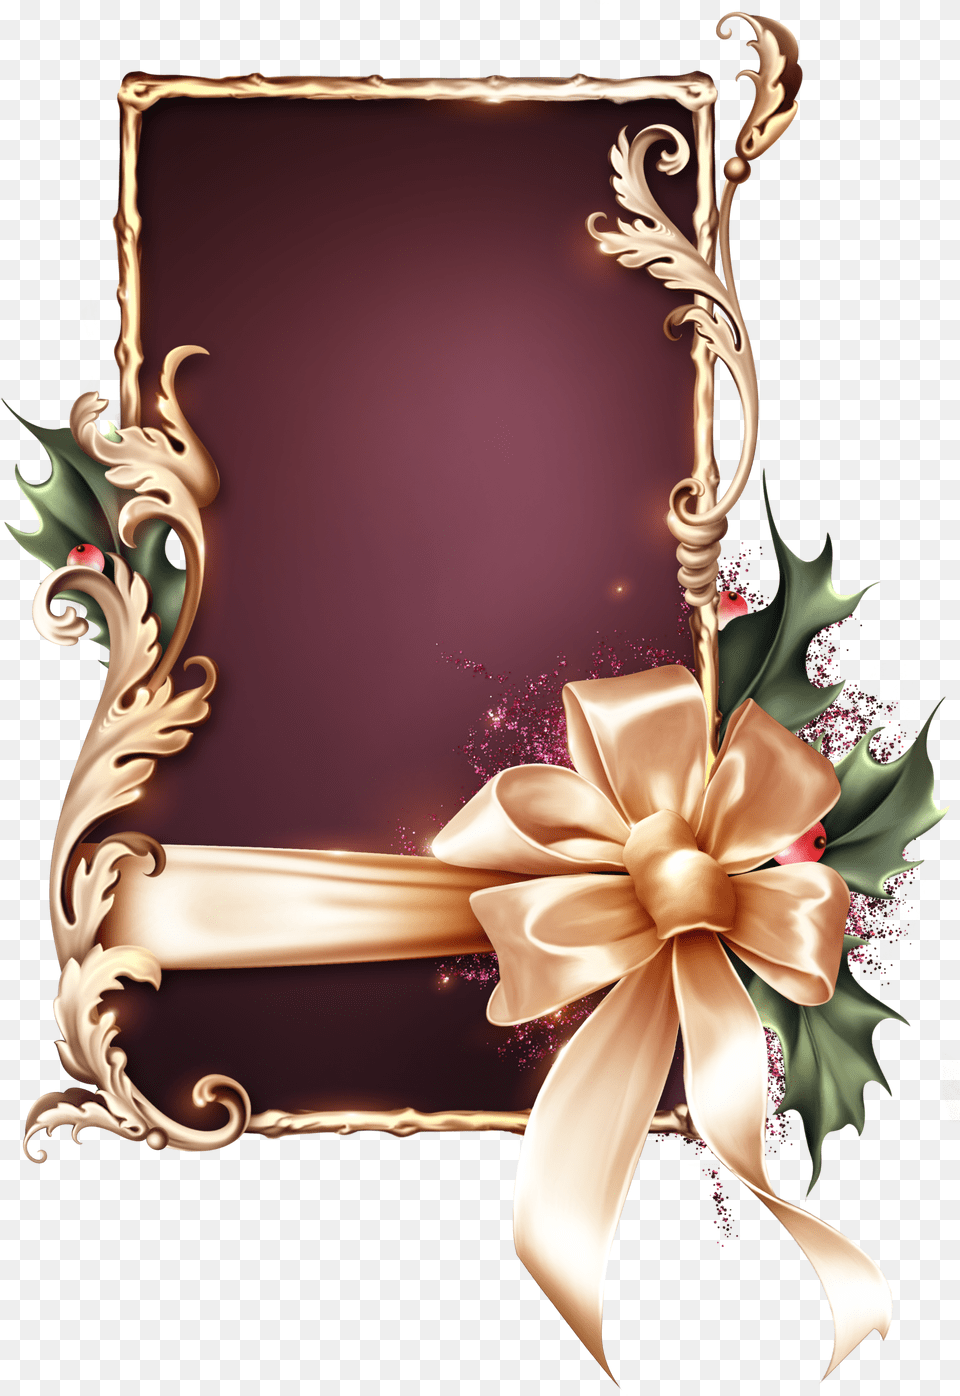 Ornate Christmas Decor Dividers Christmas Decorations Bom Dia Voce Merece Ter Um Dia Perfeito, Art, Floral Design, Graphics, Pattern Free Png Download